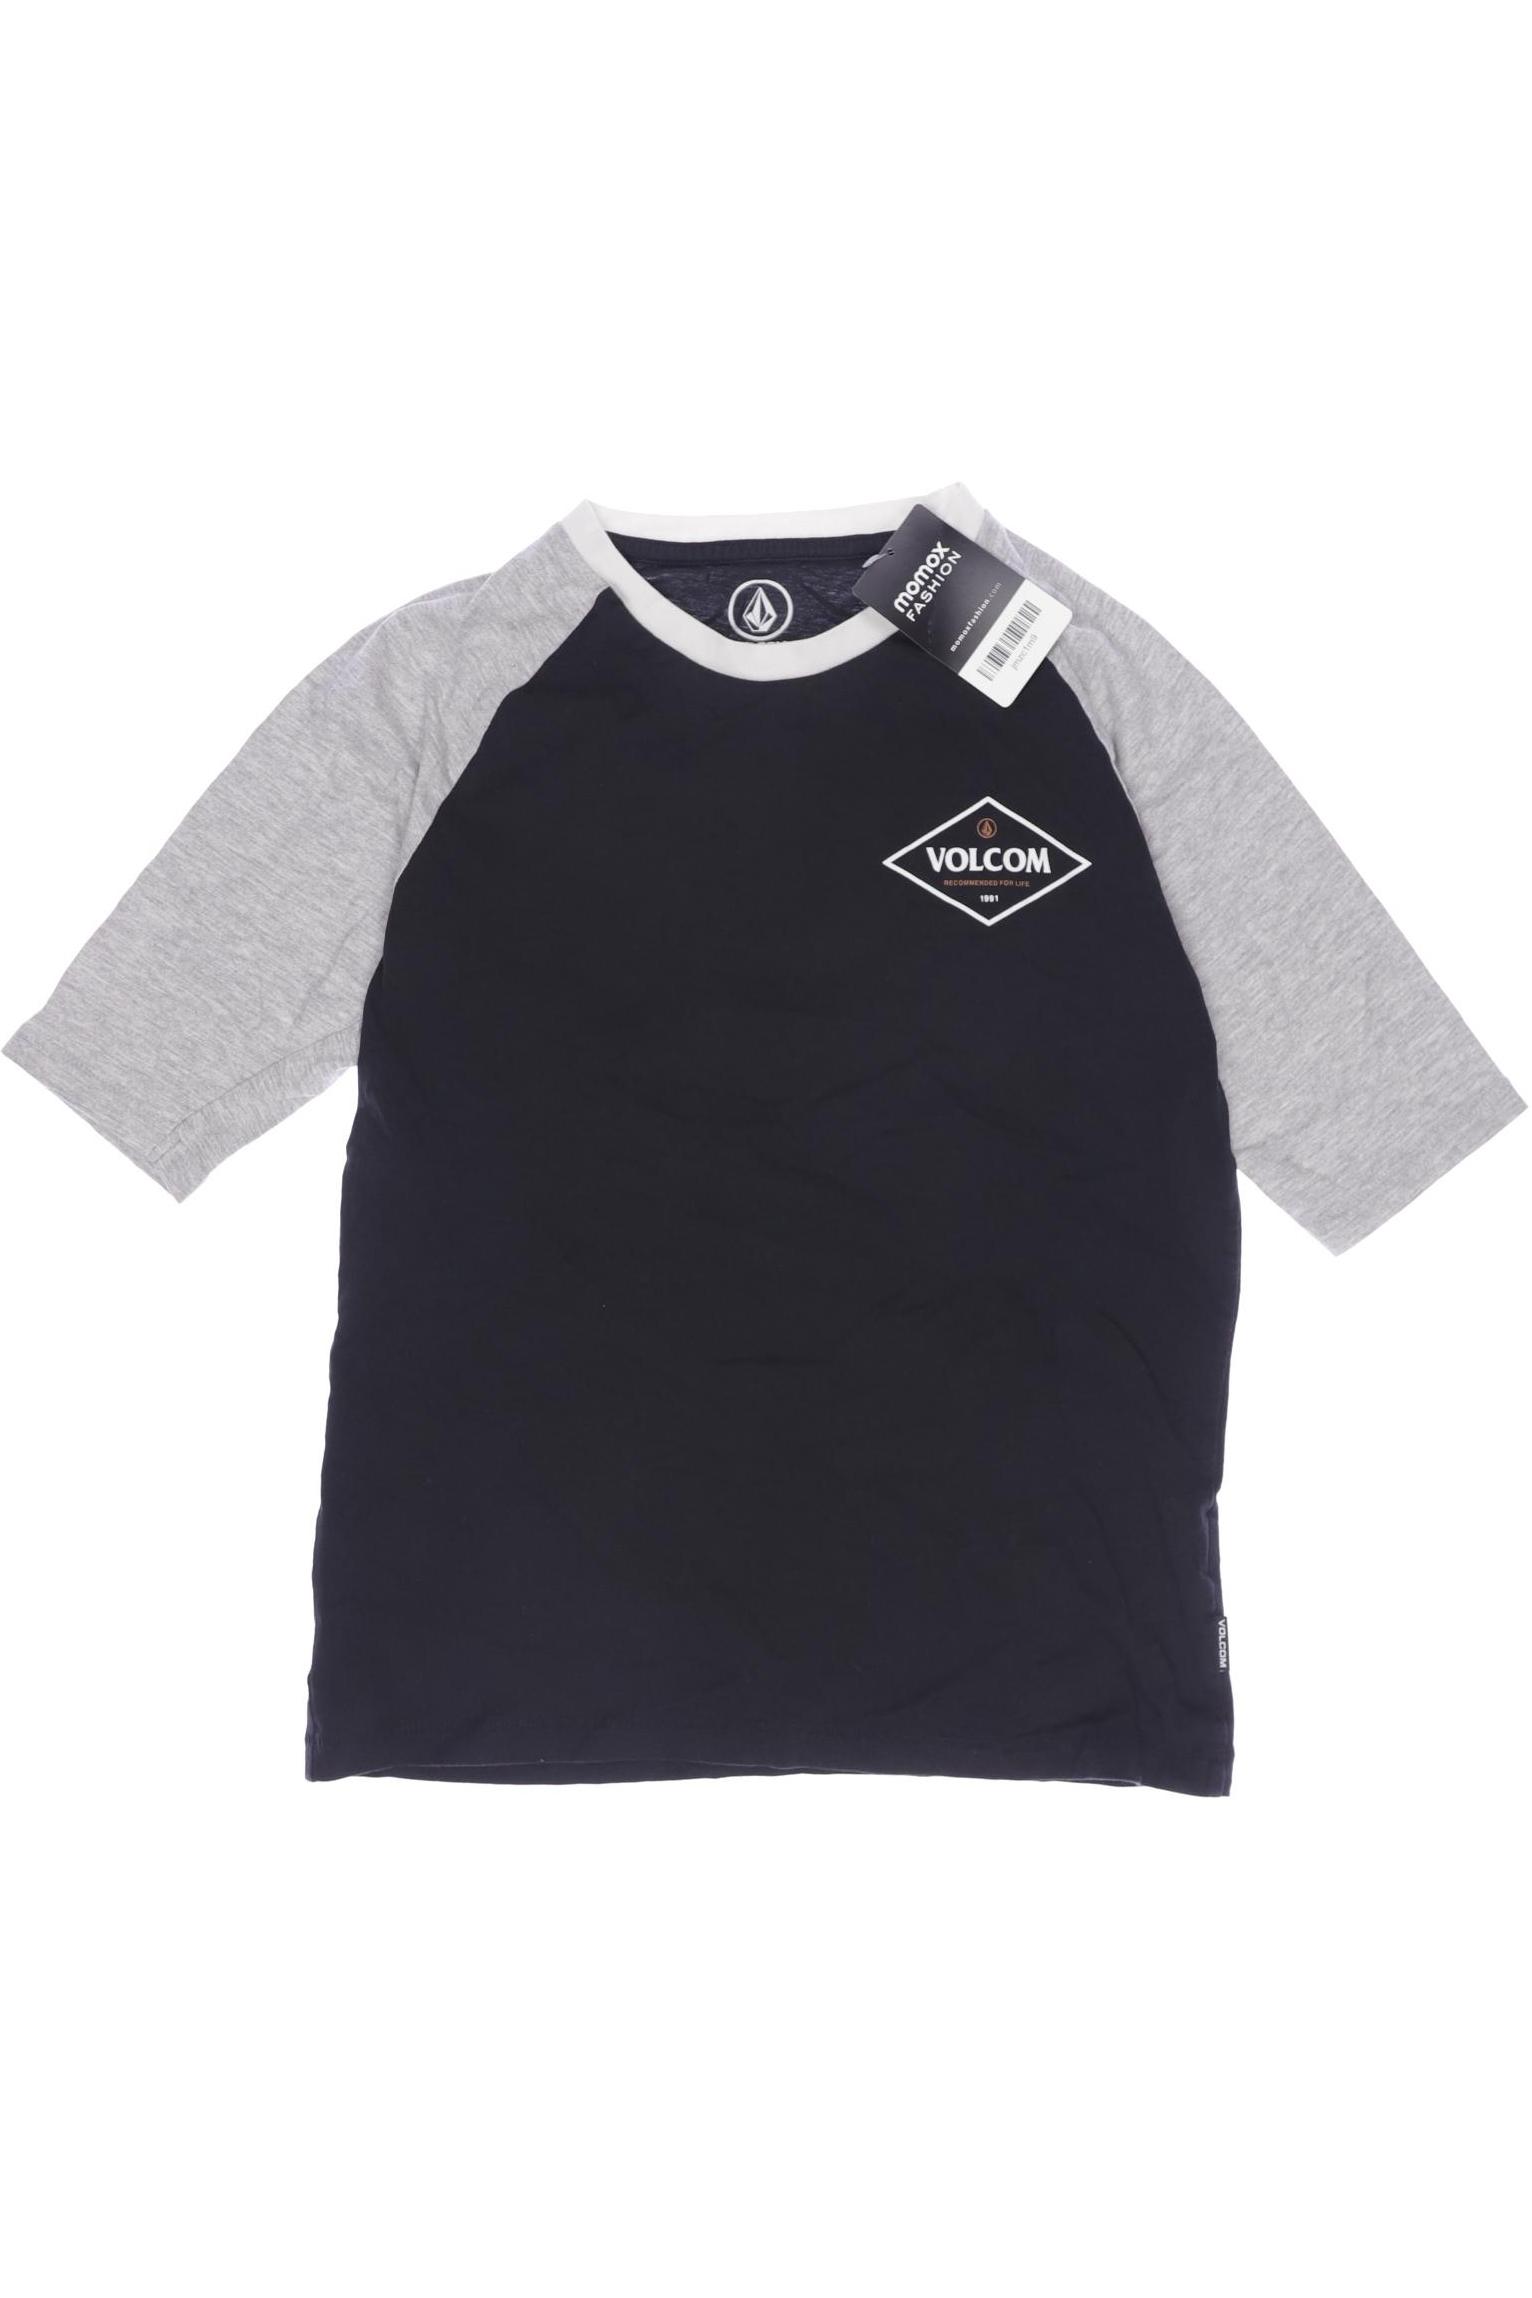 Volcom Damen T-Shirt, marineblau, Gr. 152 von Volcom